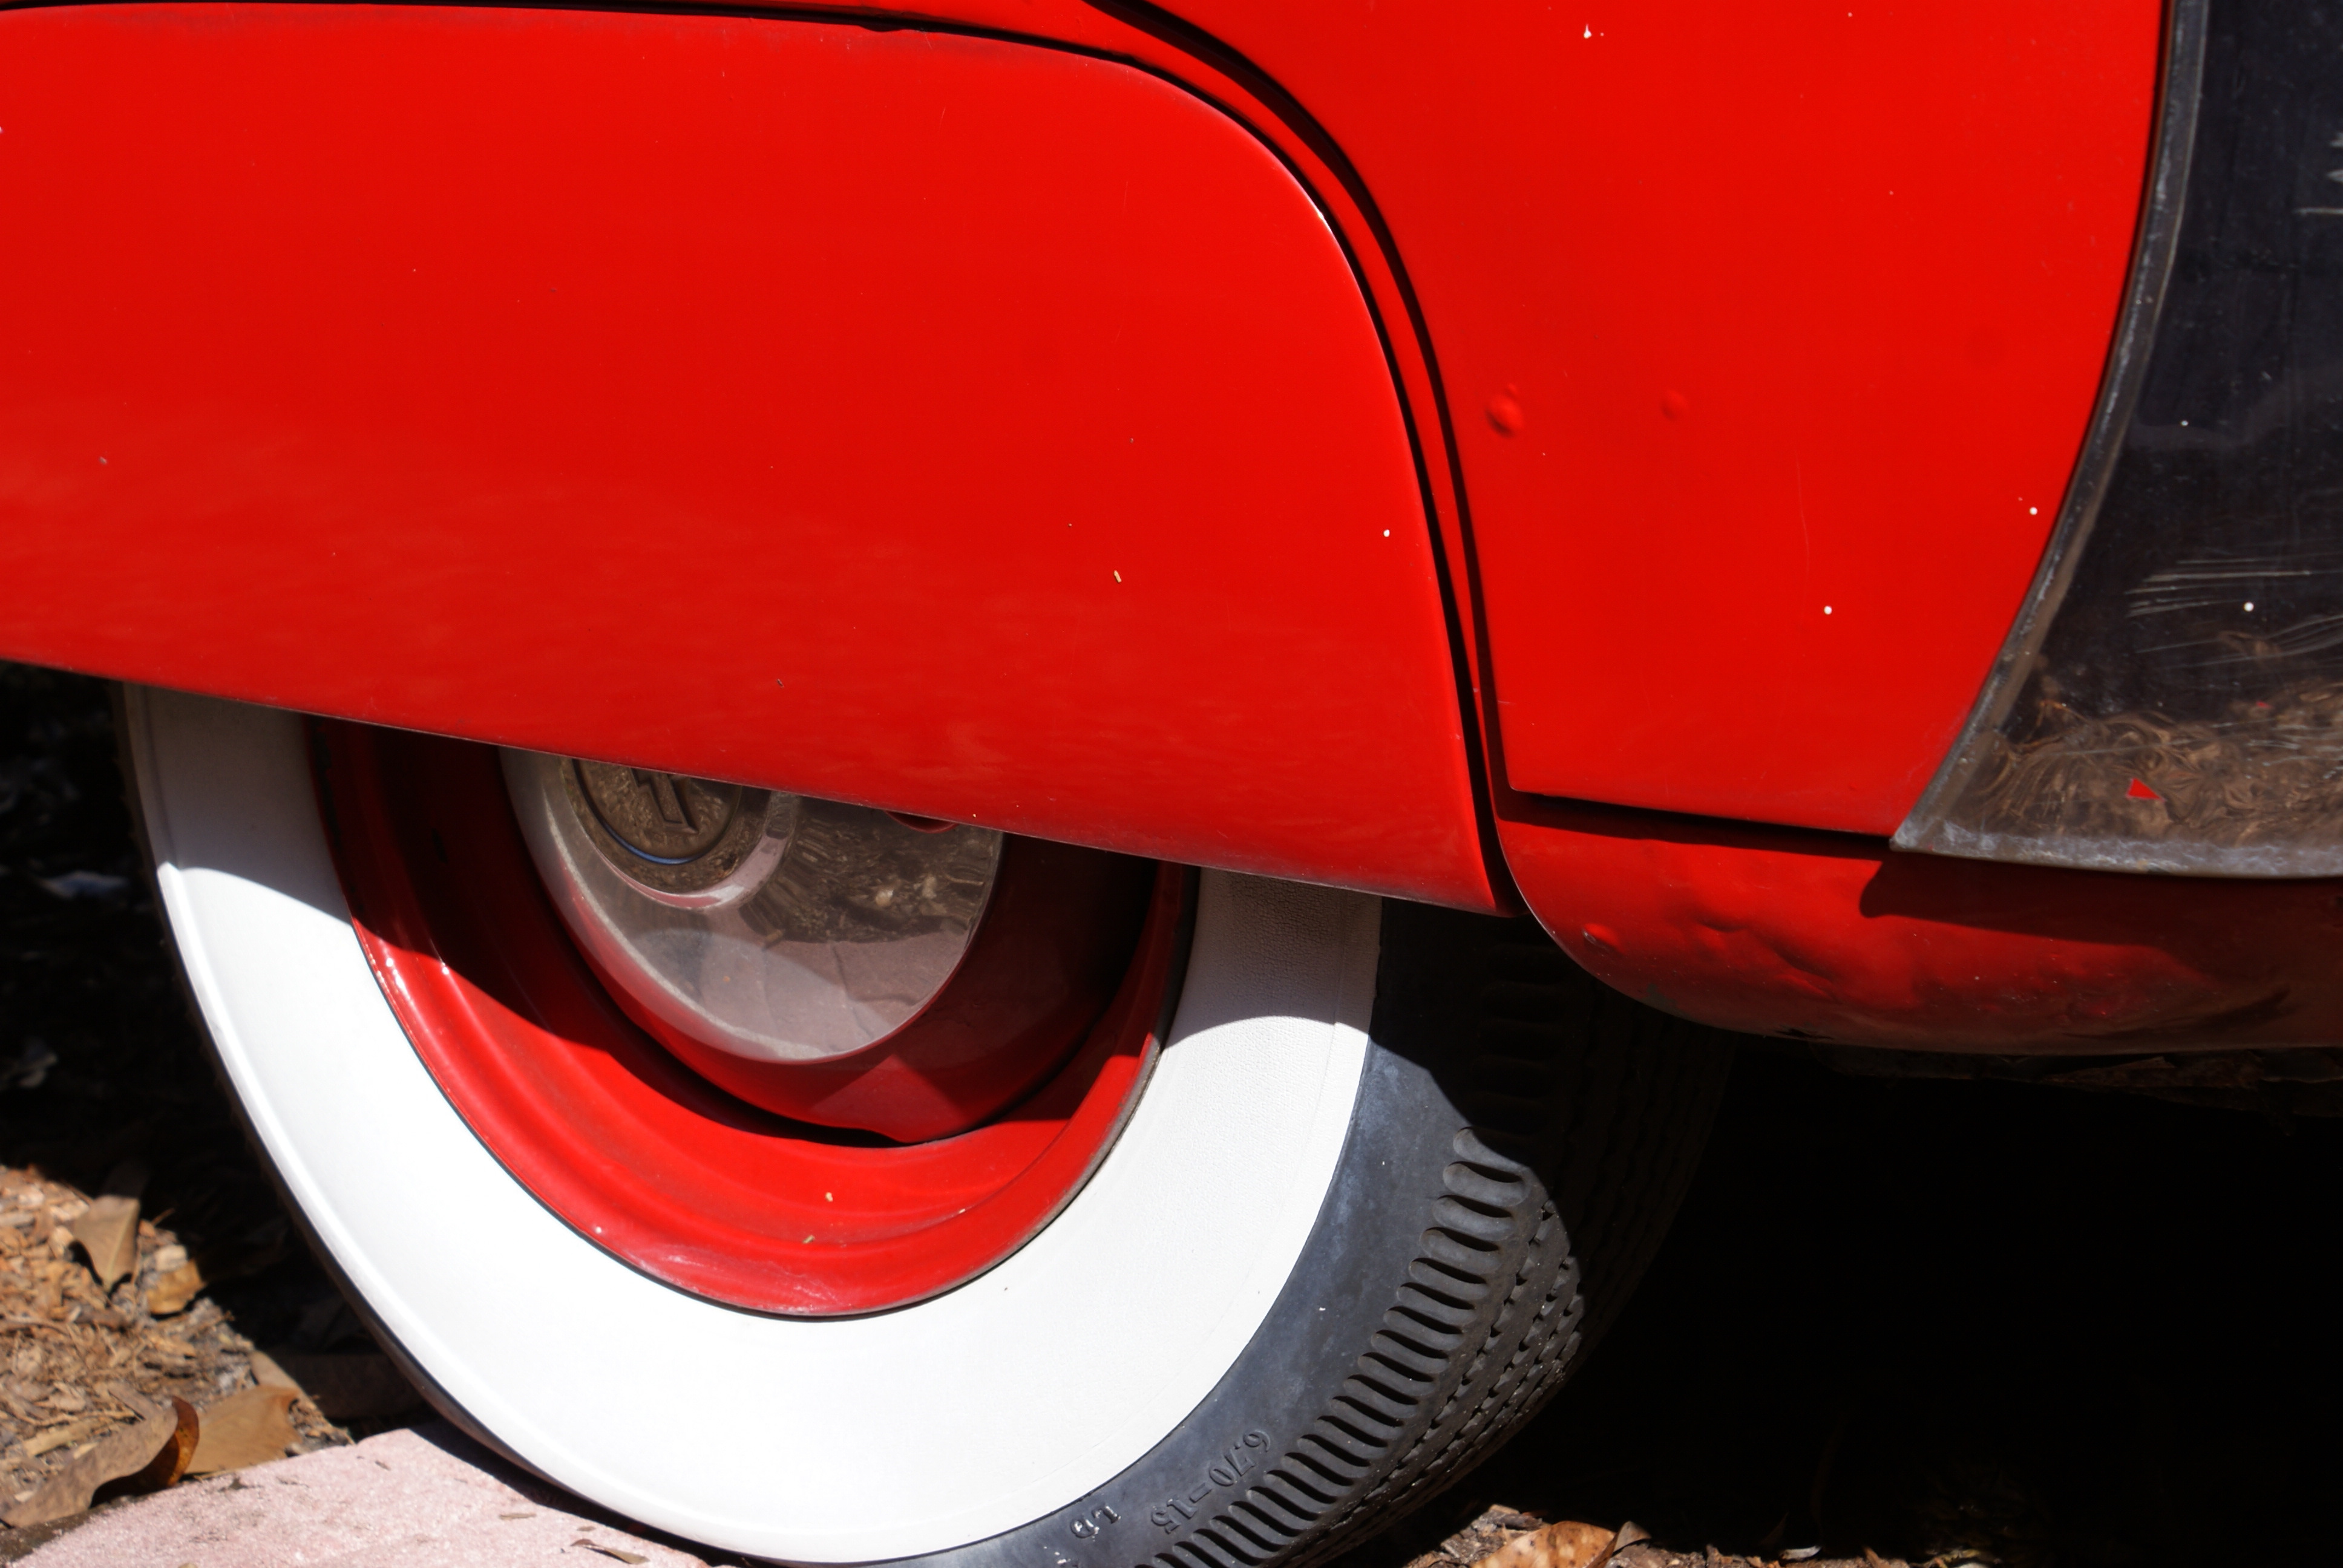 Red car - 1, Car, Classic, Red, Tire, HQ Photo